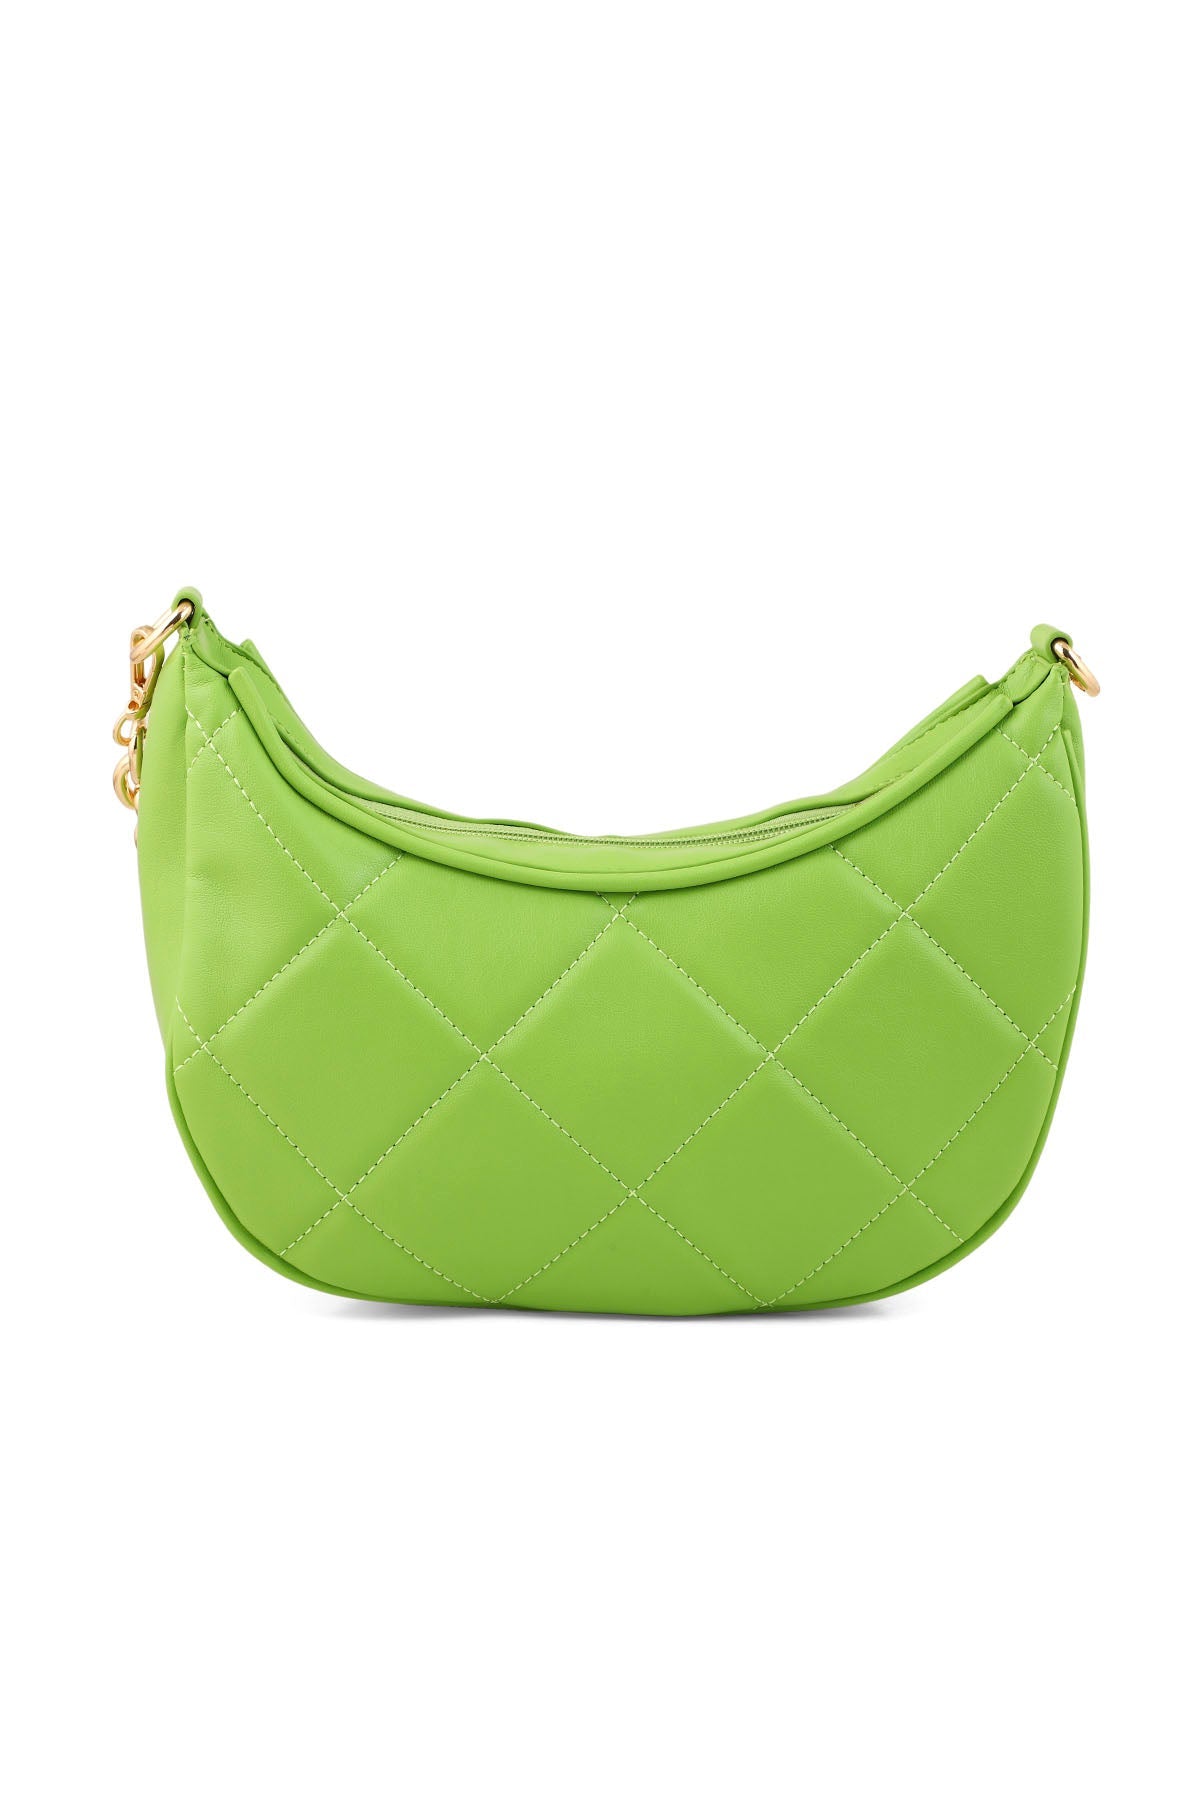 Baguette Shoulder Bags B15137-Green